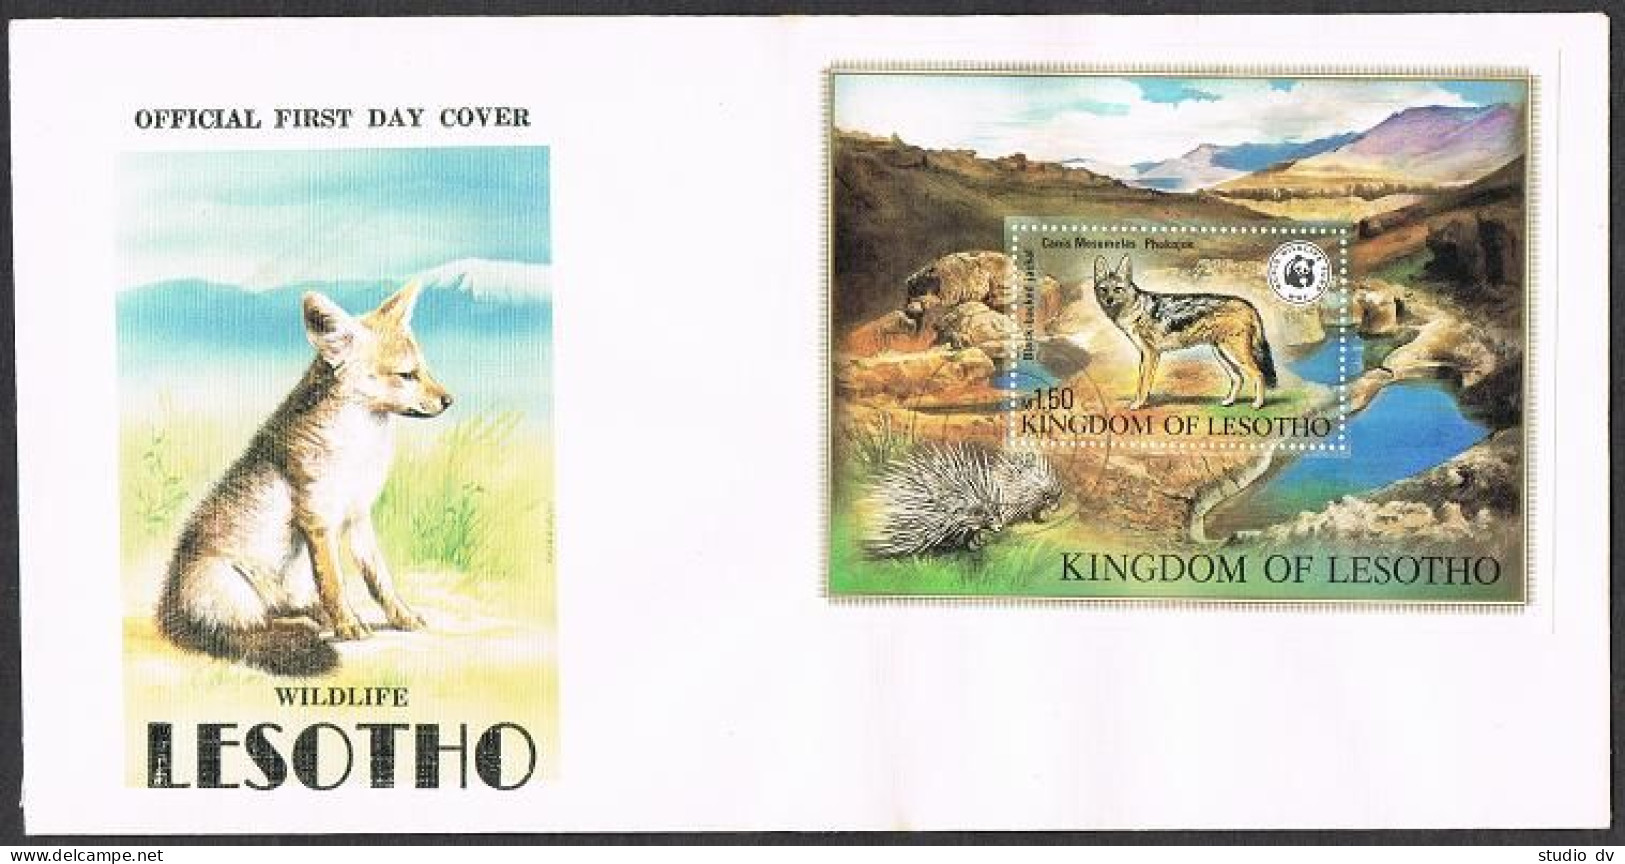 Lesotho 356 FDC. Michel 366 Bl.12. WWF 1982. Black-backed Jackal. - Lesotho (1966-...)